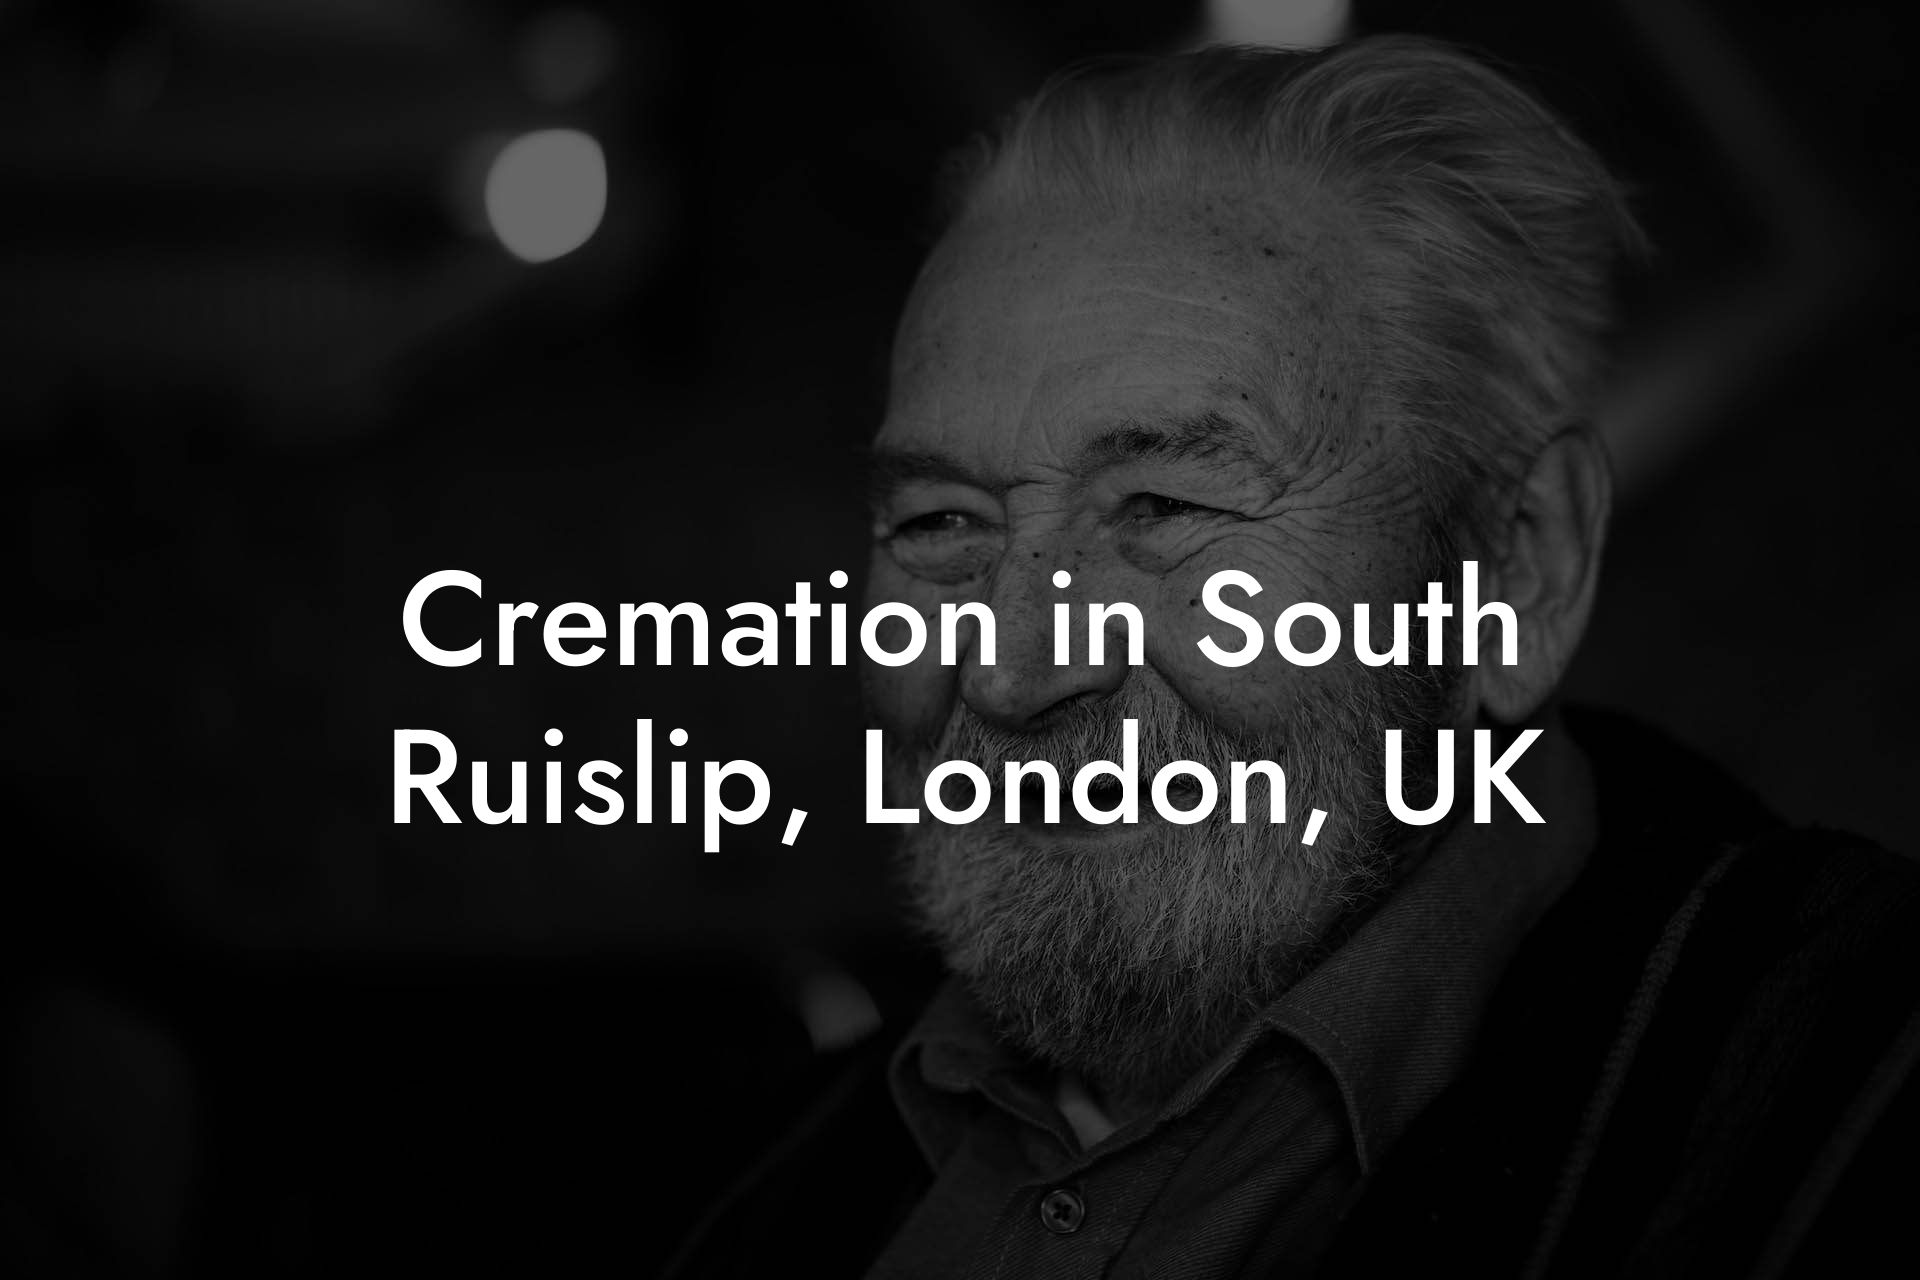 Cremation in South Ruislip, London, UK